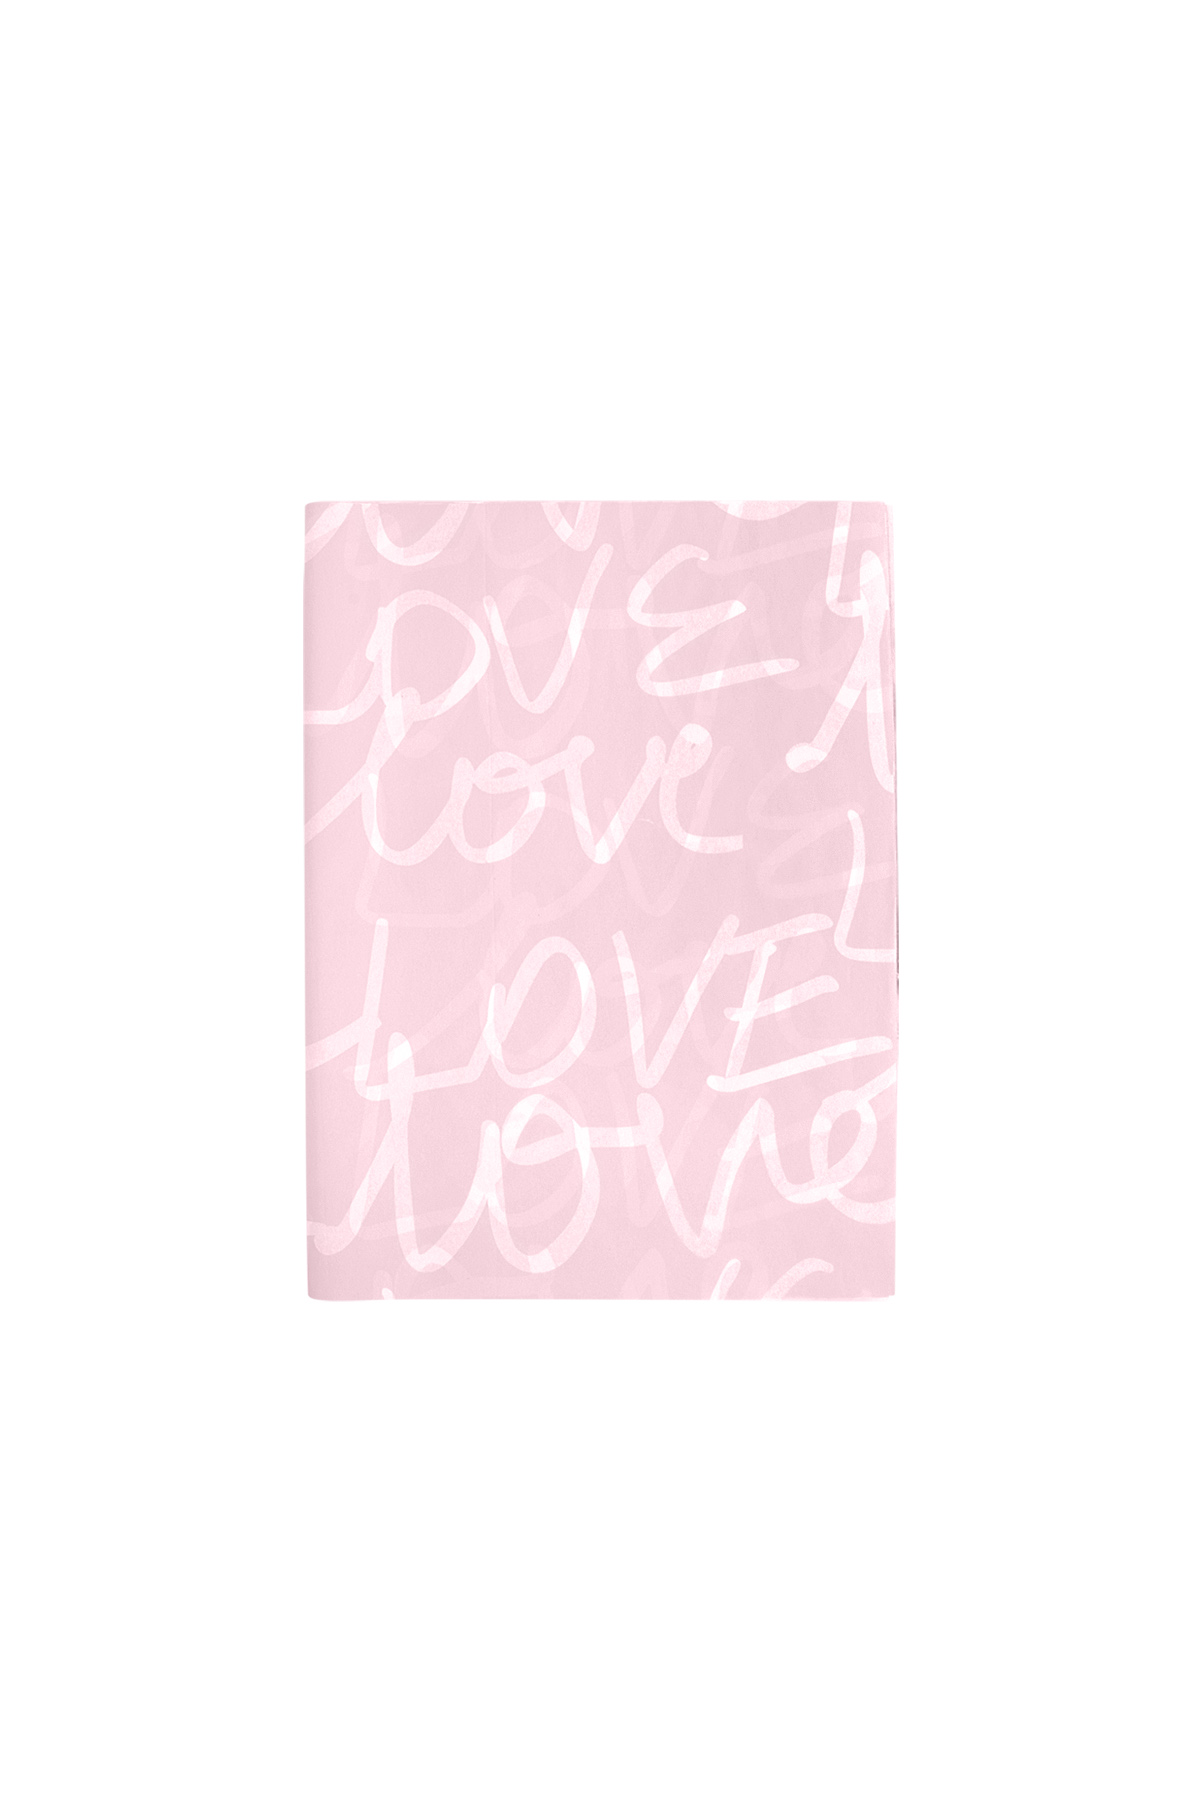 Rolling paper portrait love - pink Paper h5 